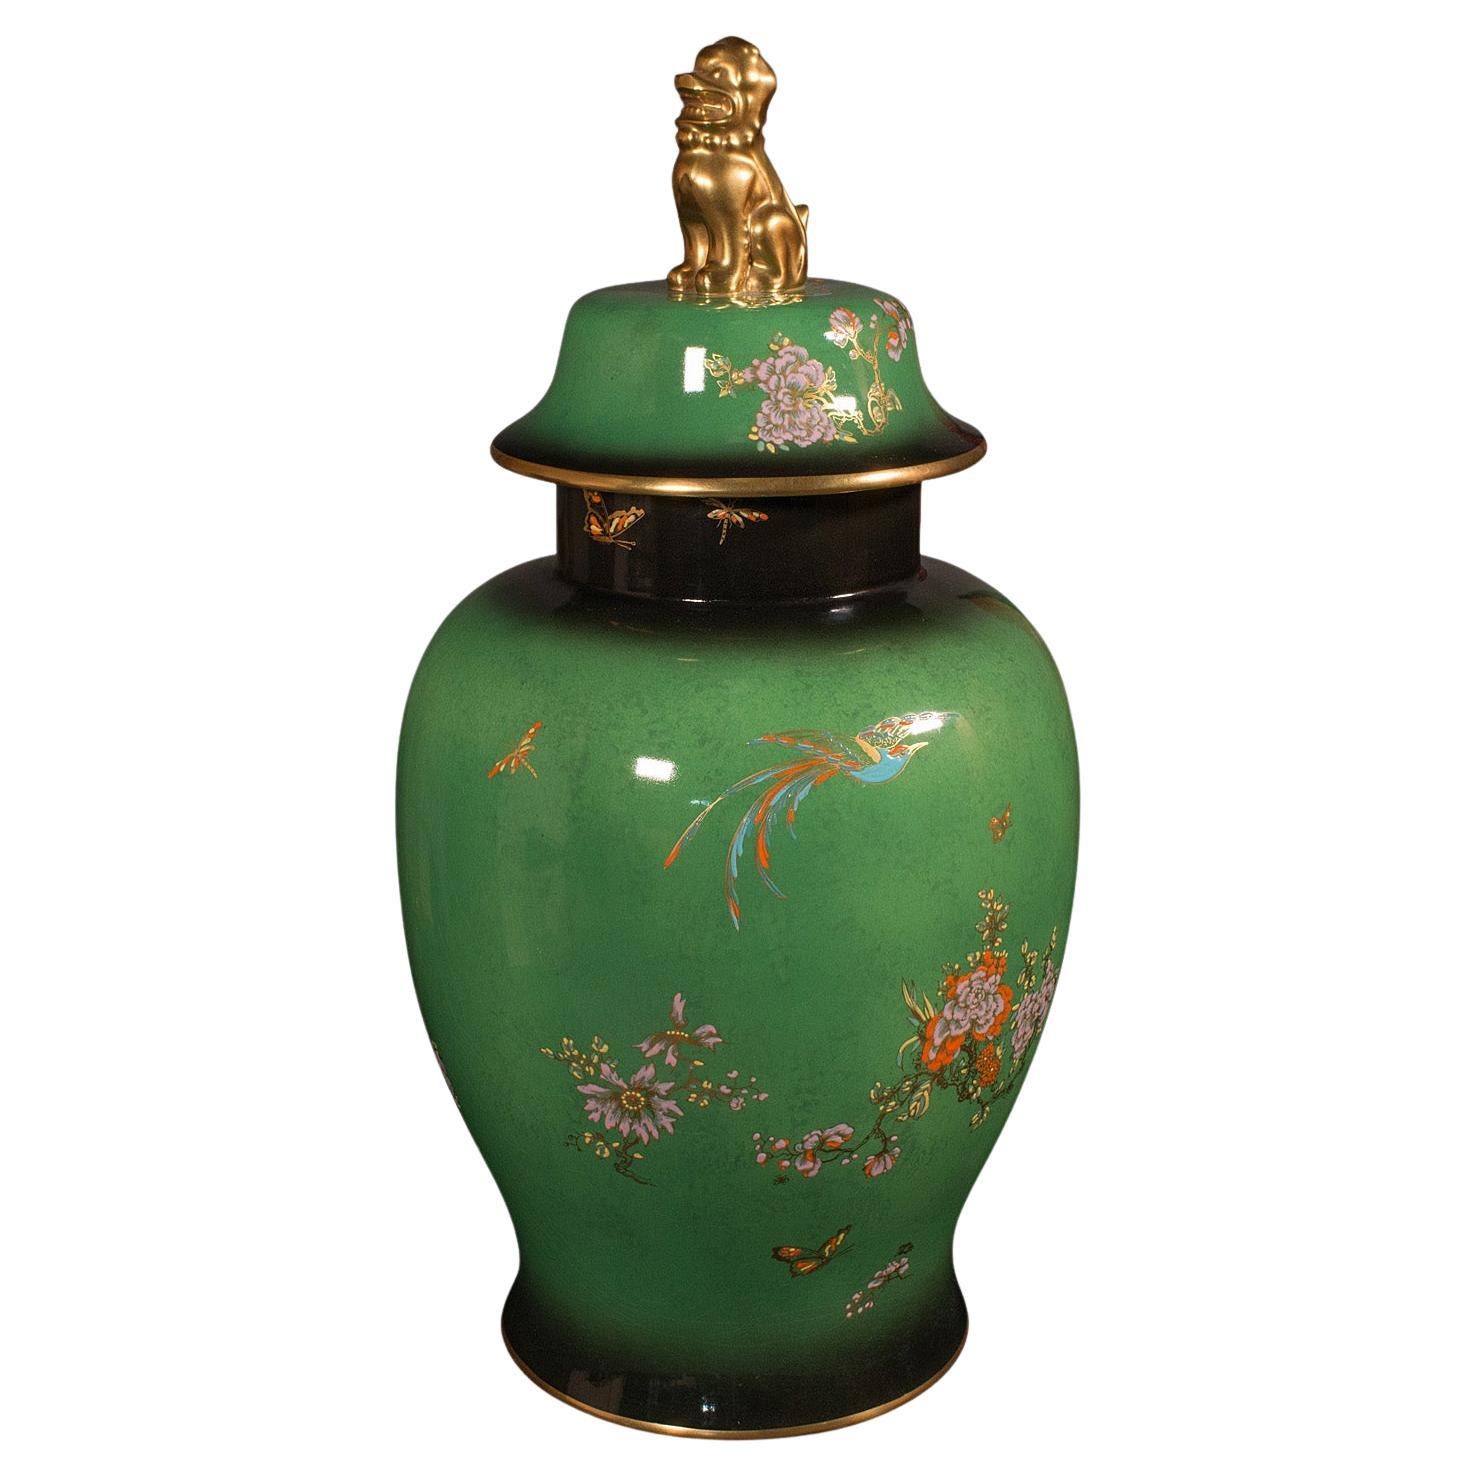 Large Vintage Decorative Temple Urn, English, Ceramic, Vase, Mid-20th Century